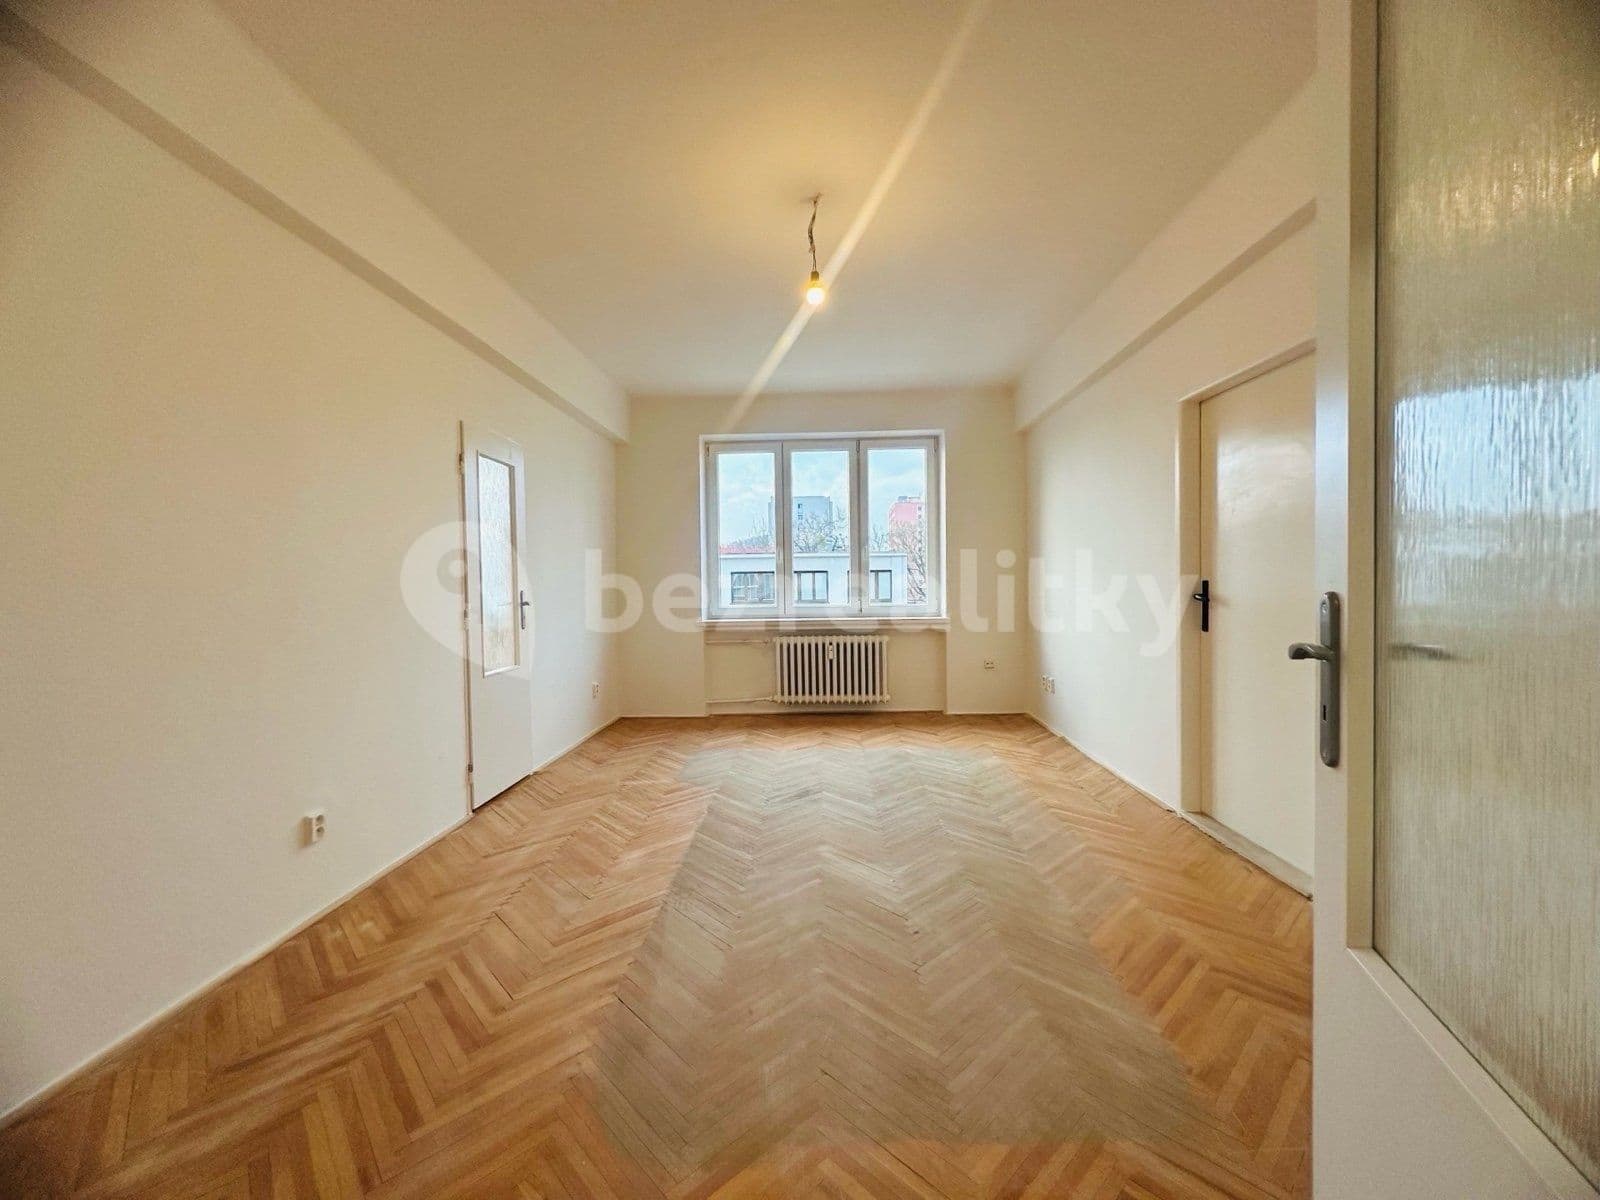 3 bedroom flat to rent, 73 m², E. F. Buriana, Ostrava, Moravskoslezský Region